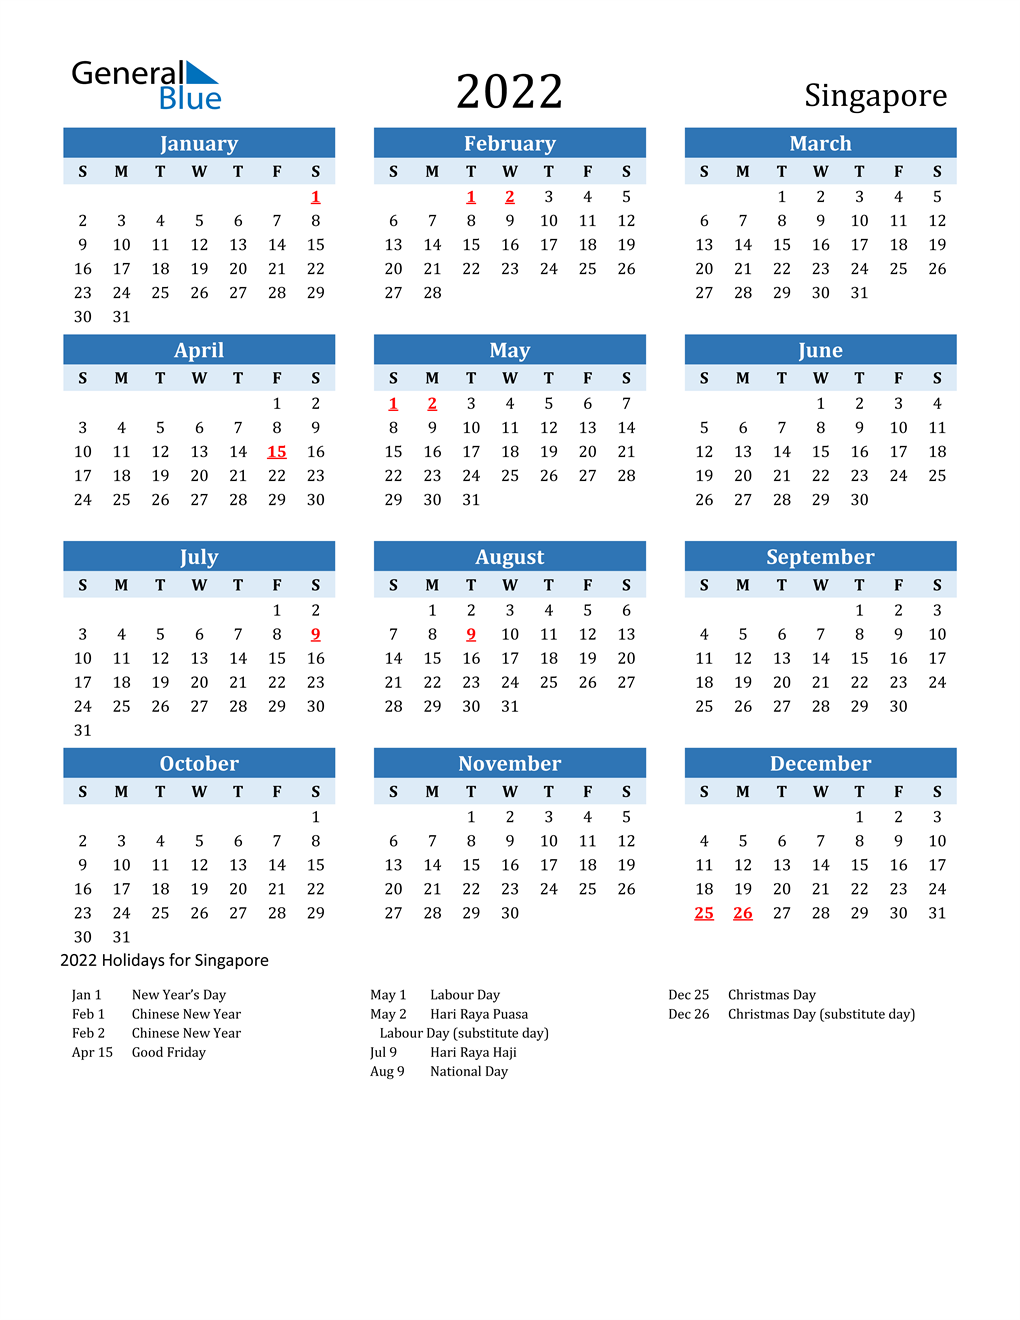 2022 Malaysia Annual Calendar With Holidays Free Printable Templates